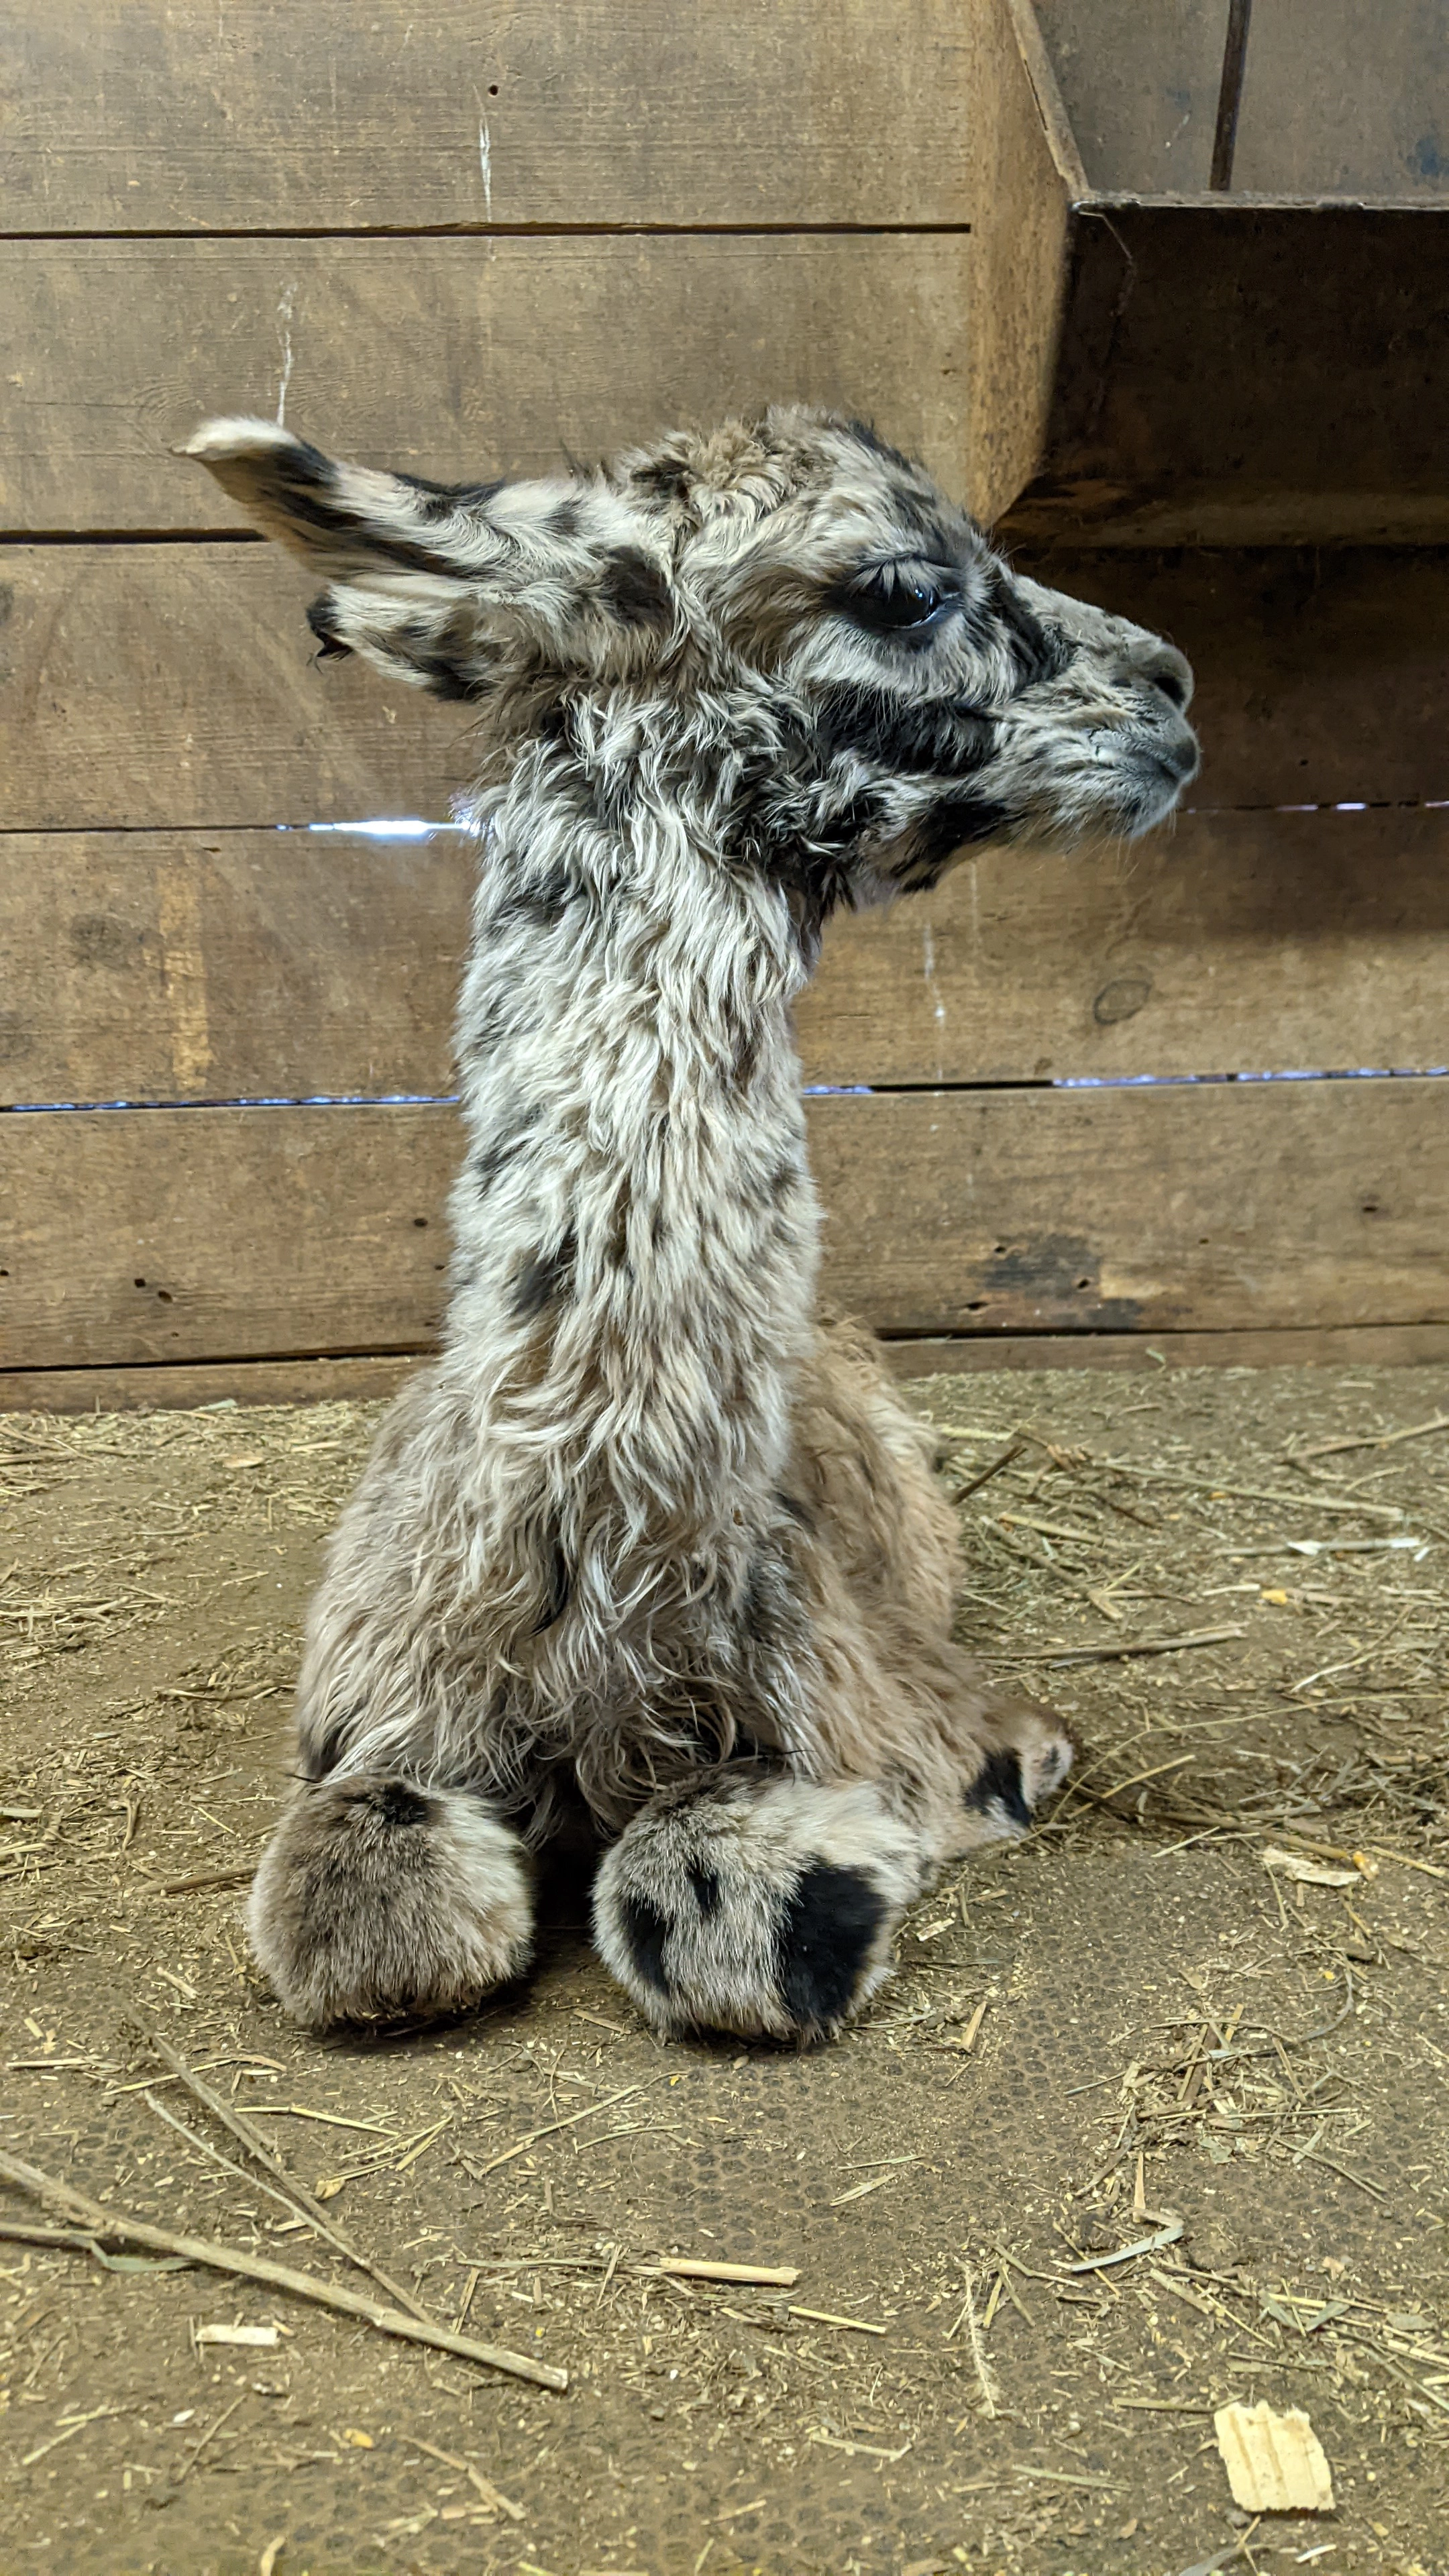 An profile view of a newborn llama named Fitz